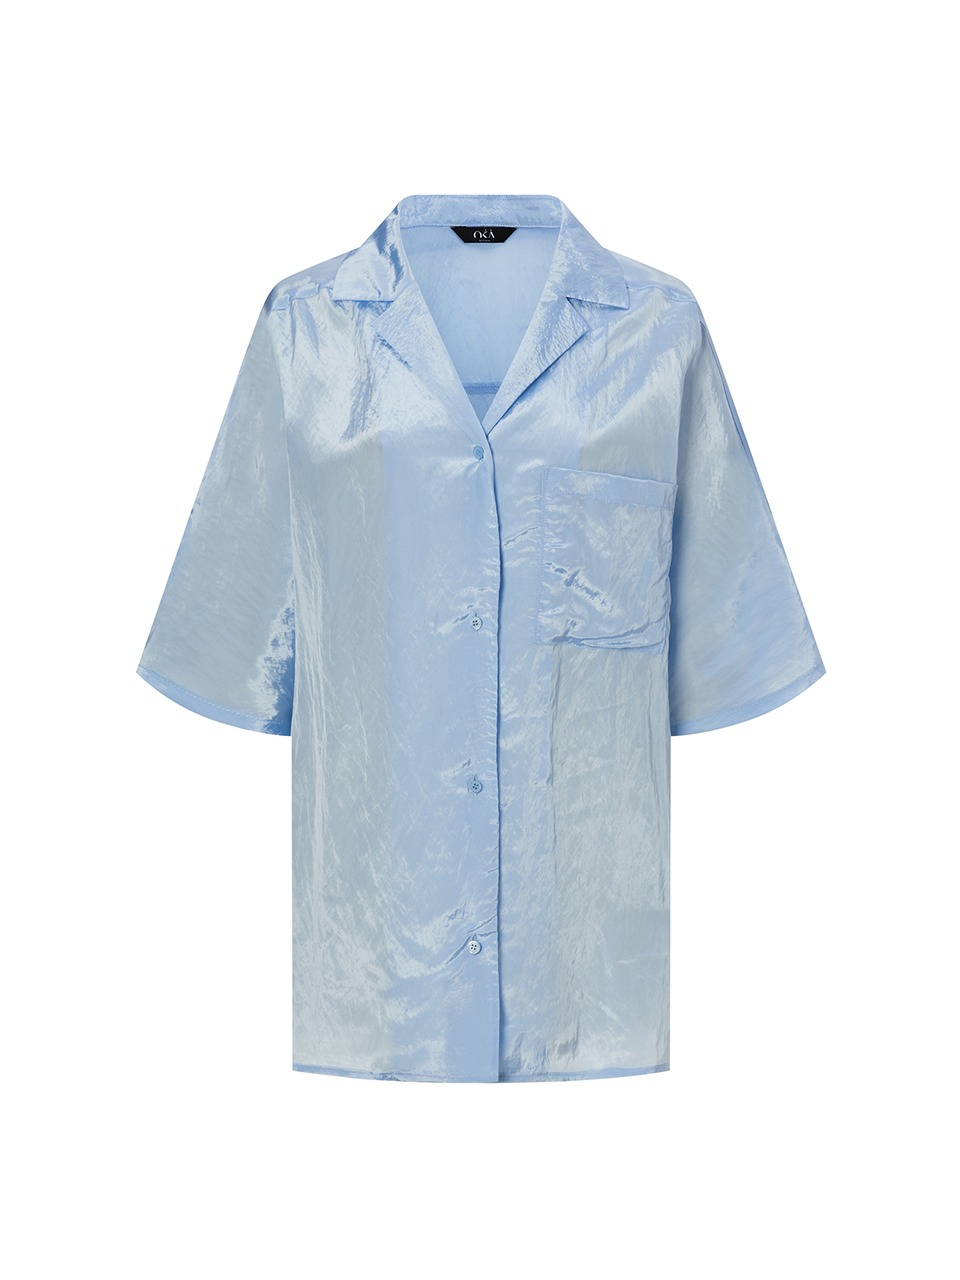 Sekina  Overfit Half Shirts Sky Blue